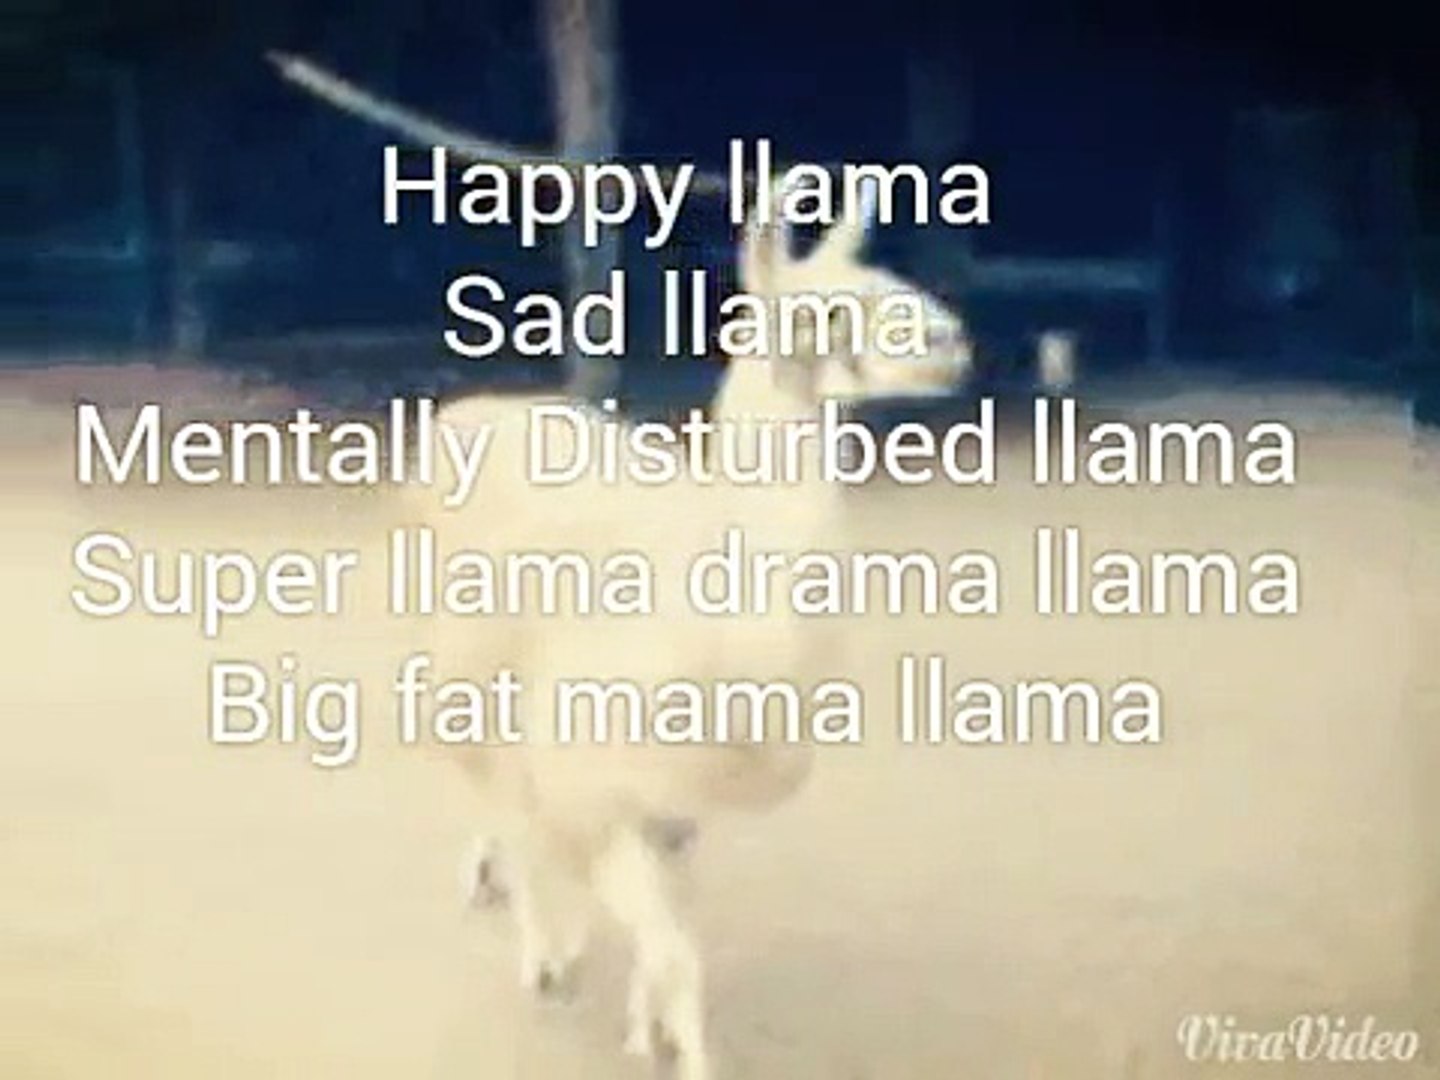 The llama song from Twaimz - video Dailymotion